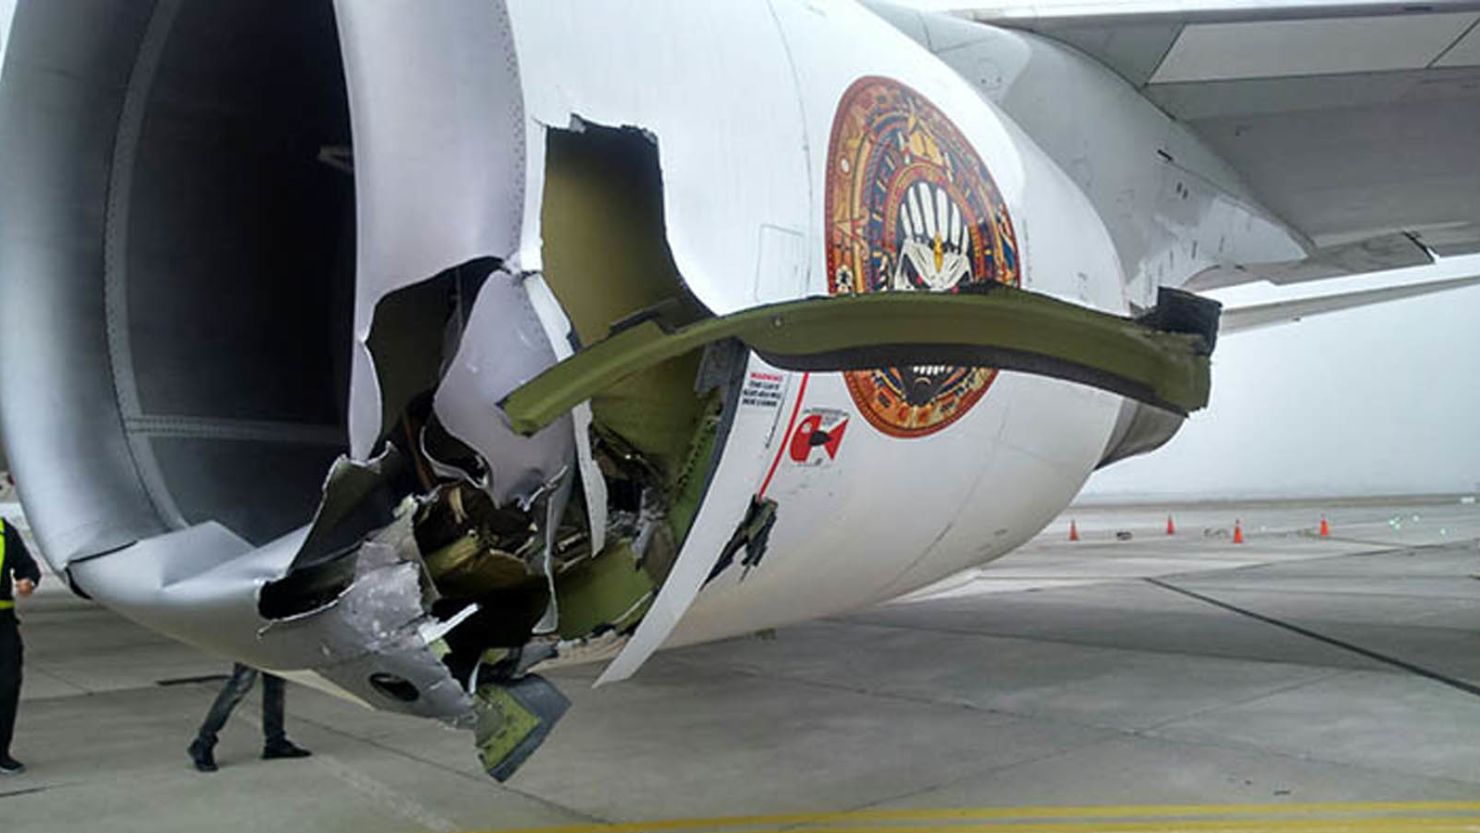 iron maiden plane damage